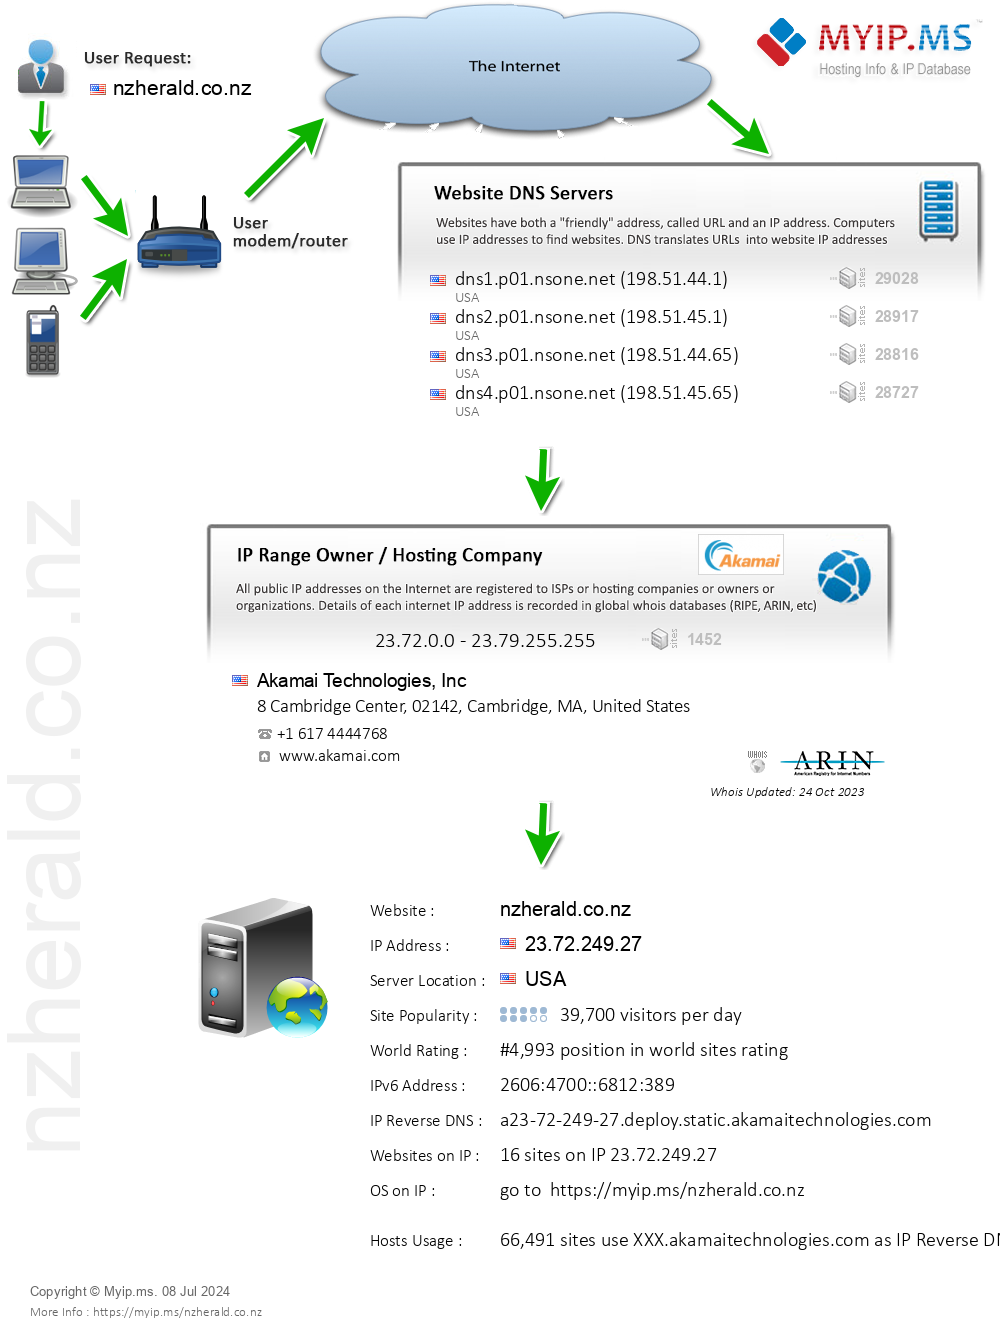 Nzherald.co.nz - Website Hosting Visual IP Diagram